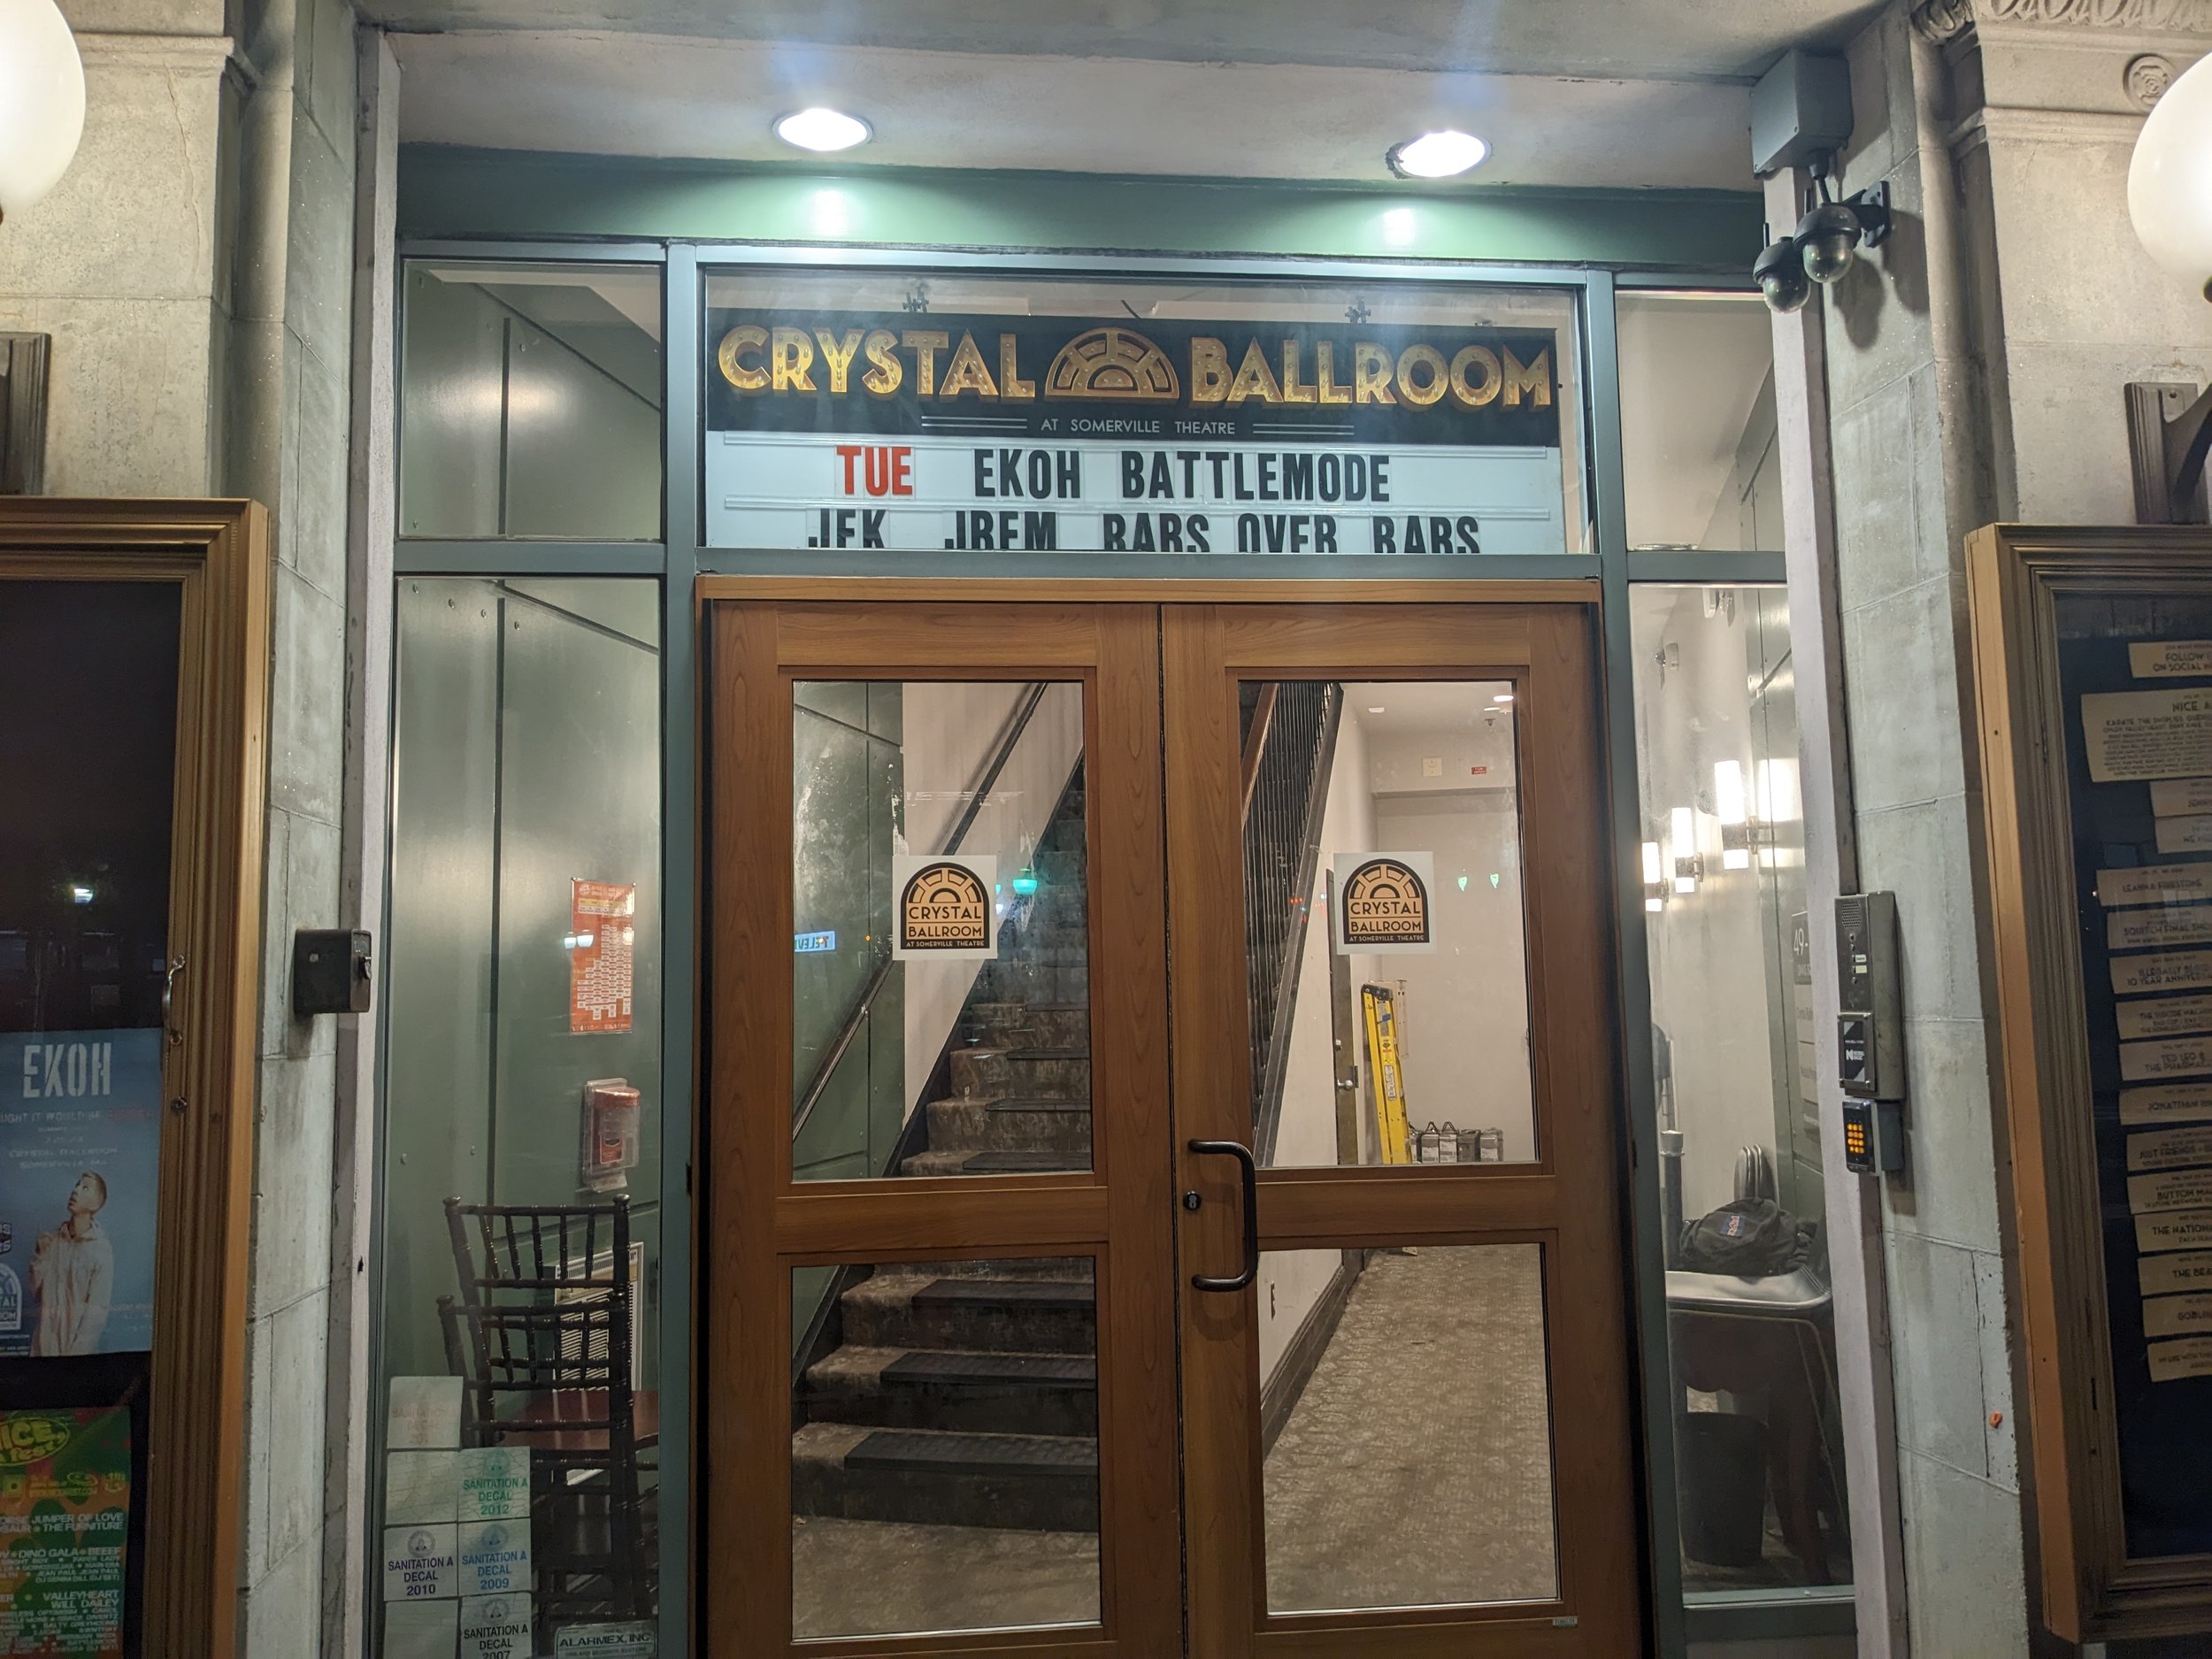 230725-live-review-crystal-ballroom-ekoh-battlemode-j-rem-just-for-kicks-alt.jpg